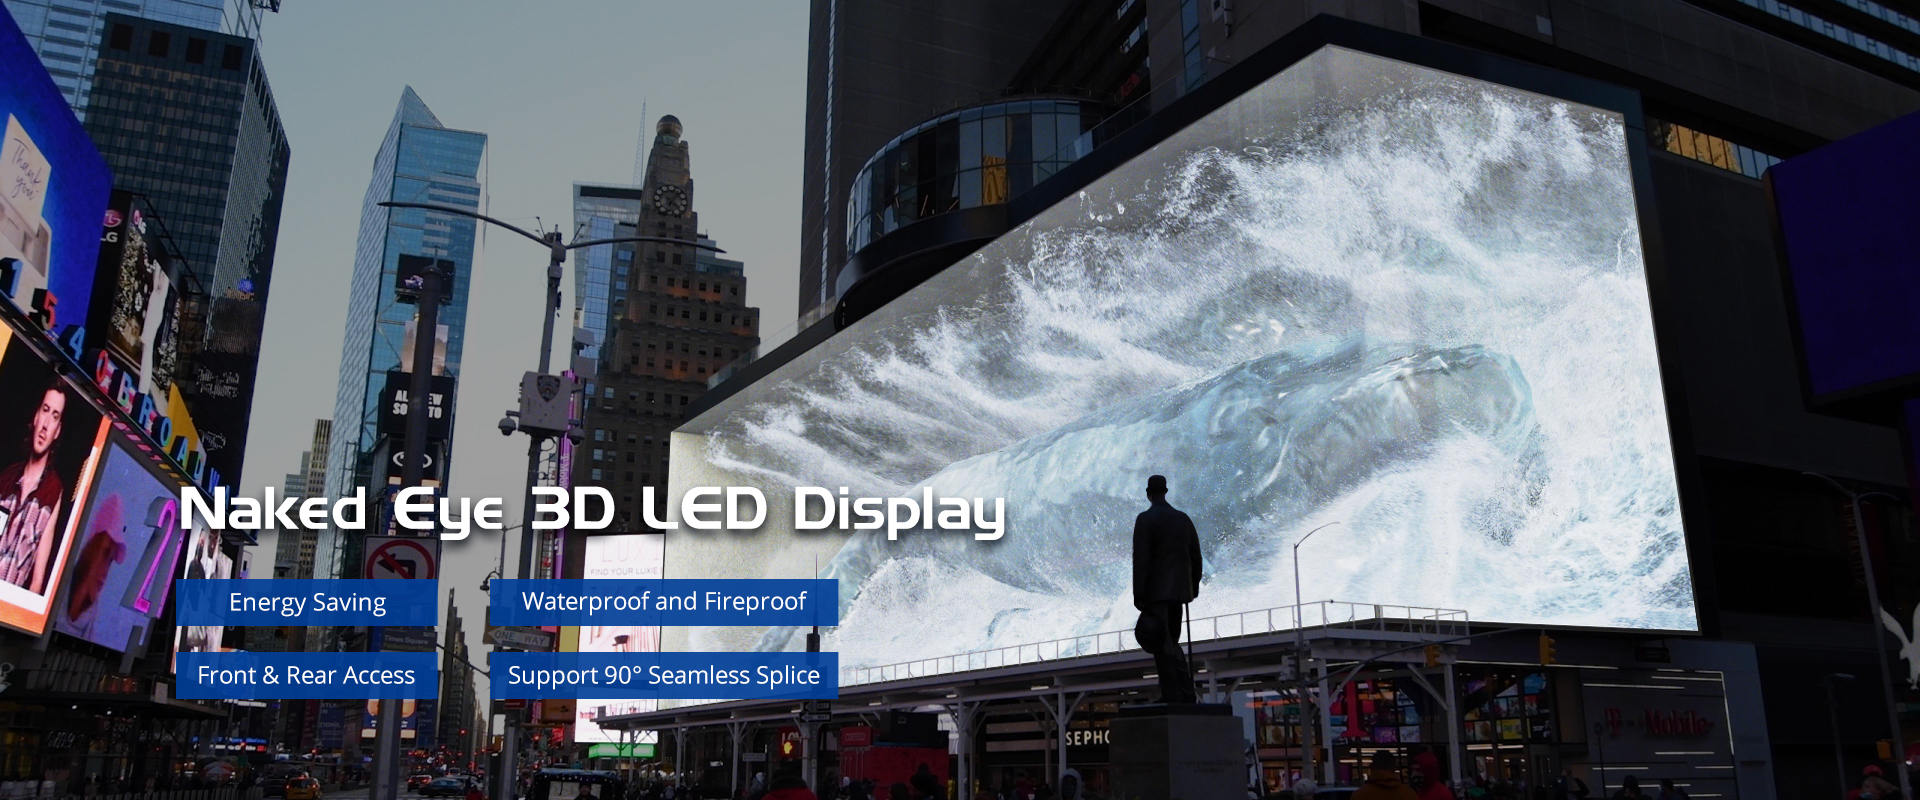 naked-eye 3D LED display